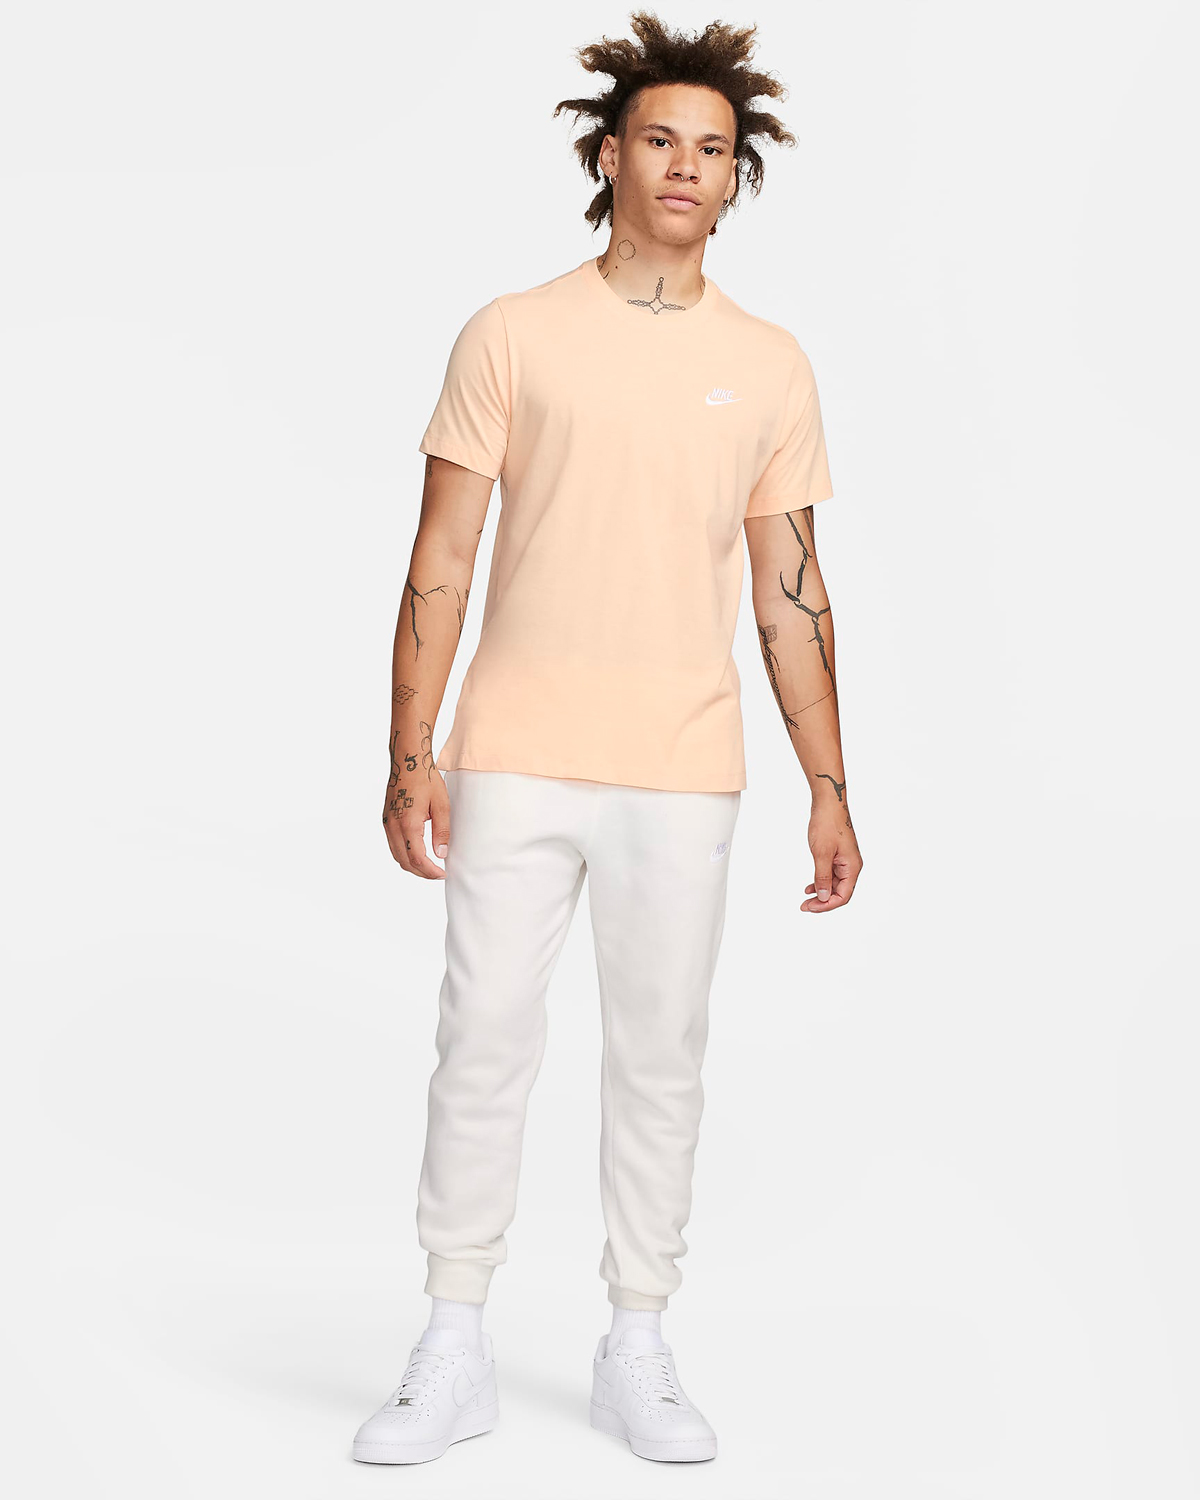 Nike-Sportswear-Club-T-Shirt-Ice-Peach-1